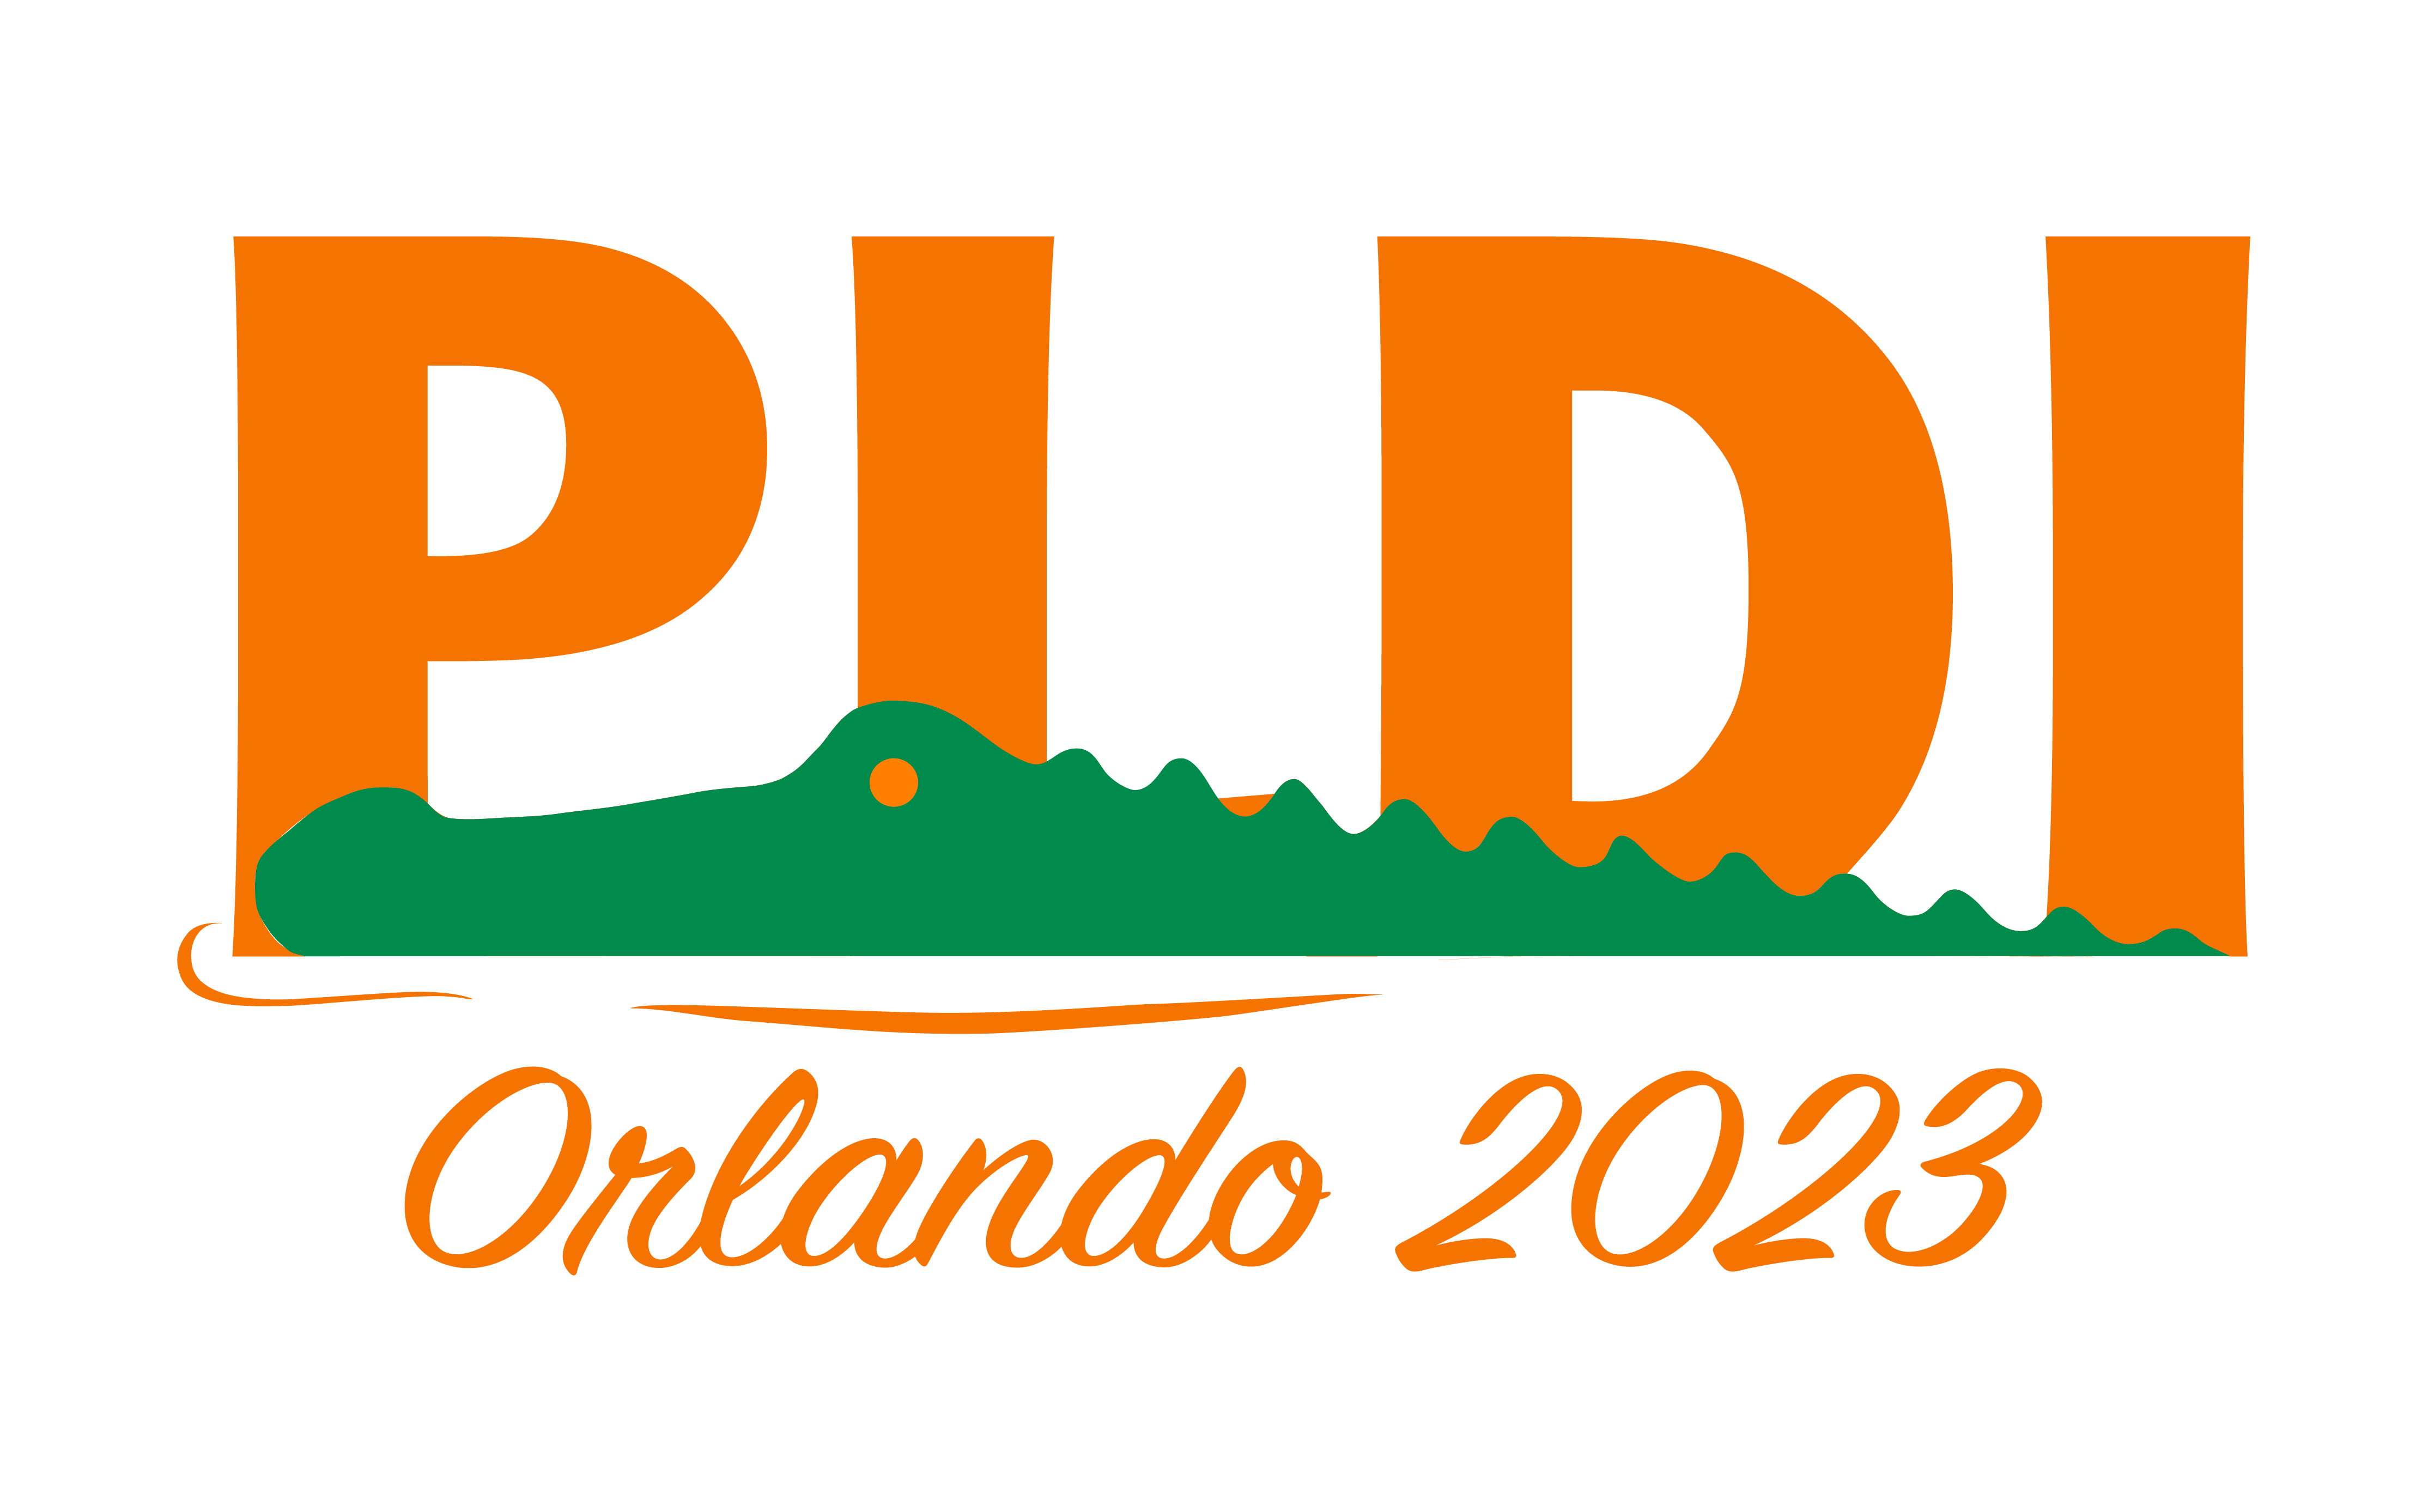 PLARCH 2023 logo